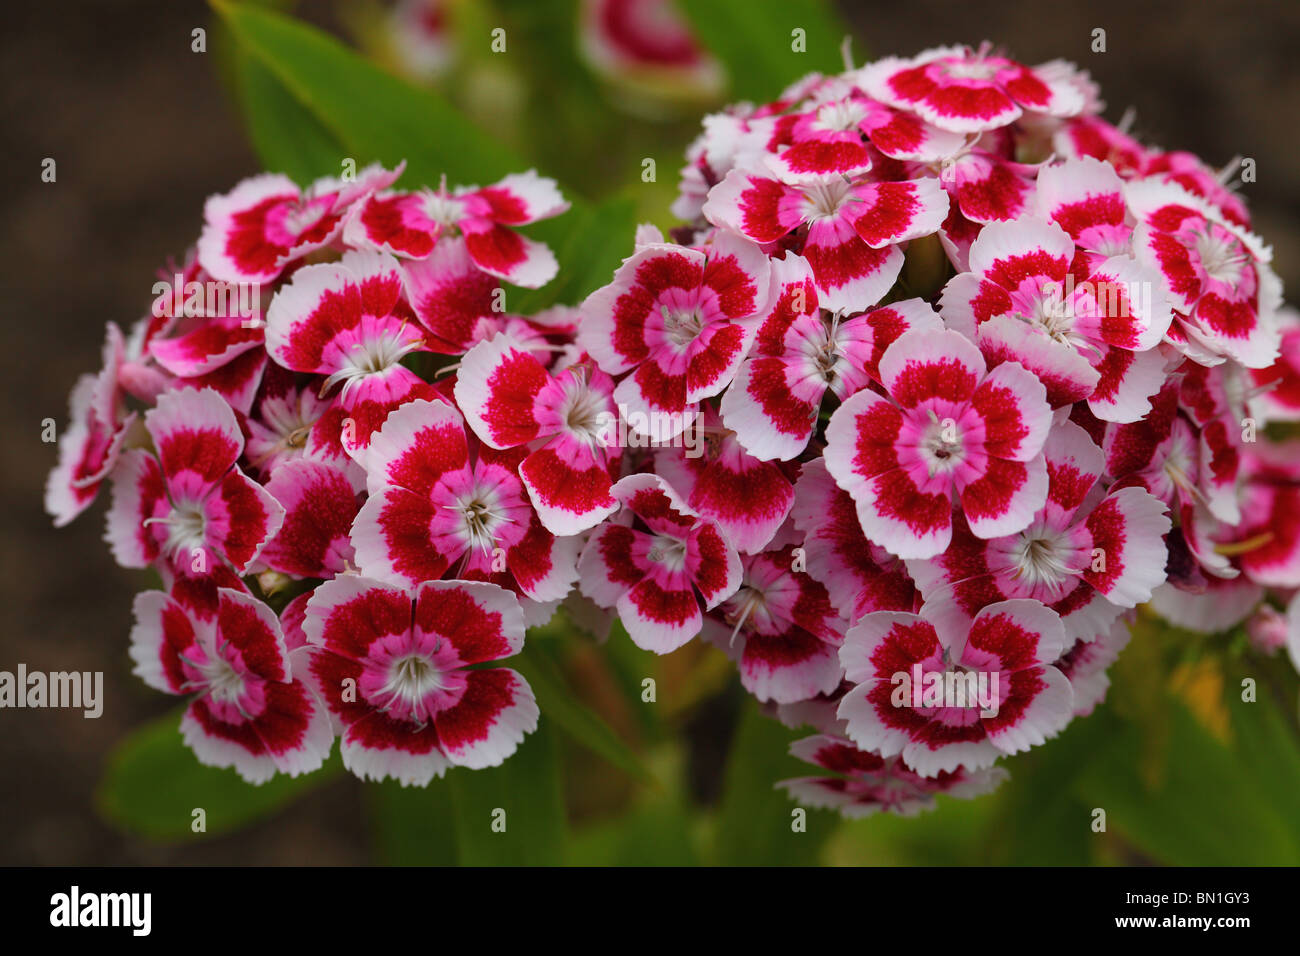 Carnation Sweet wiliams Dianthus barbatus flowers close up Stock Photo